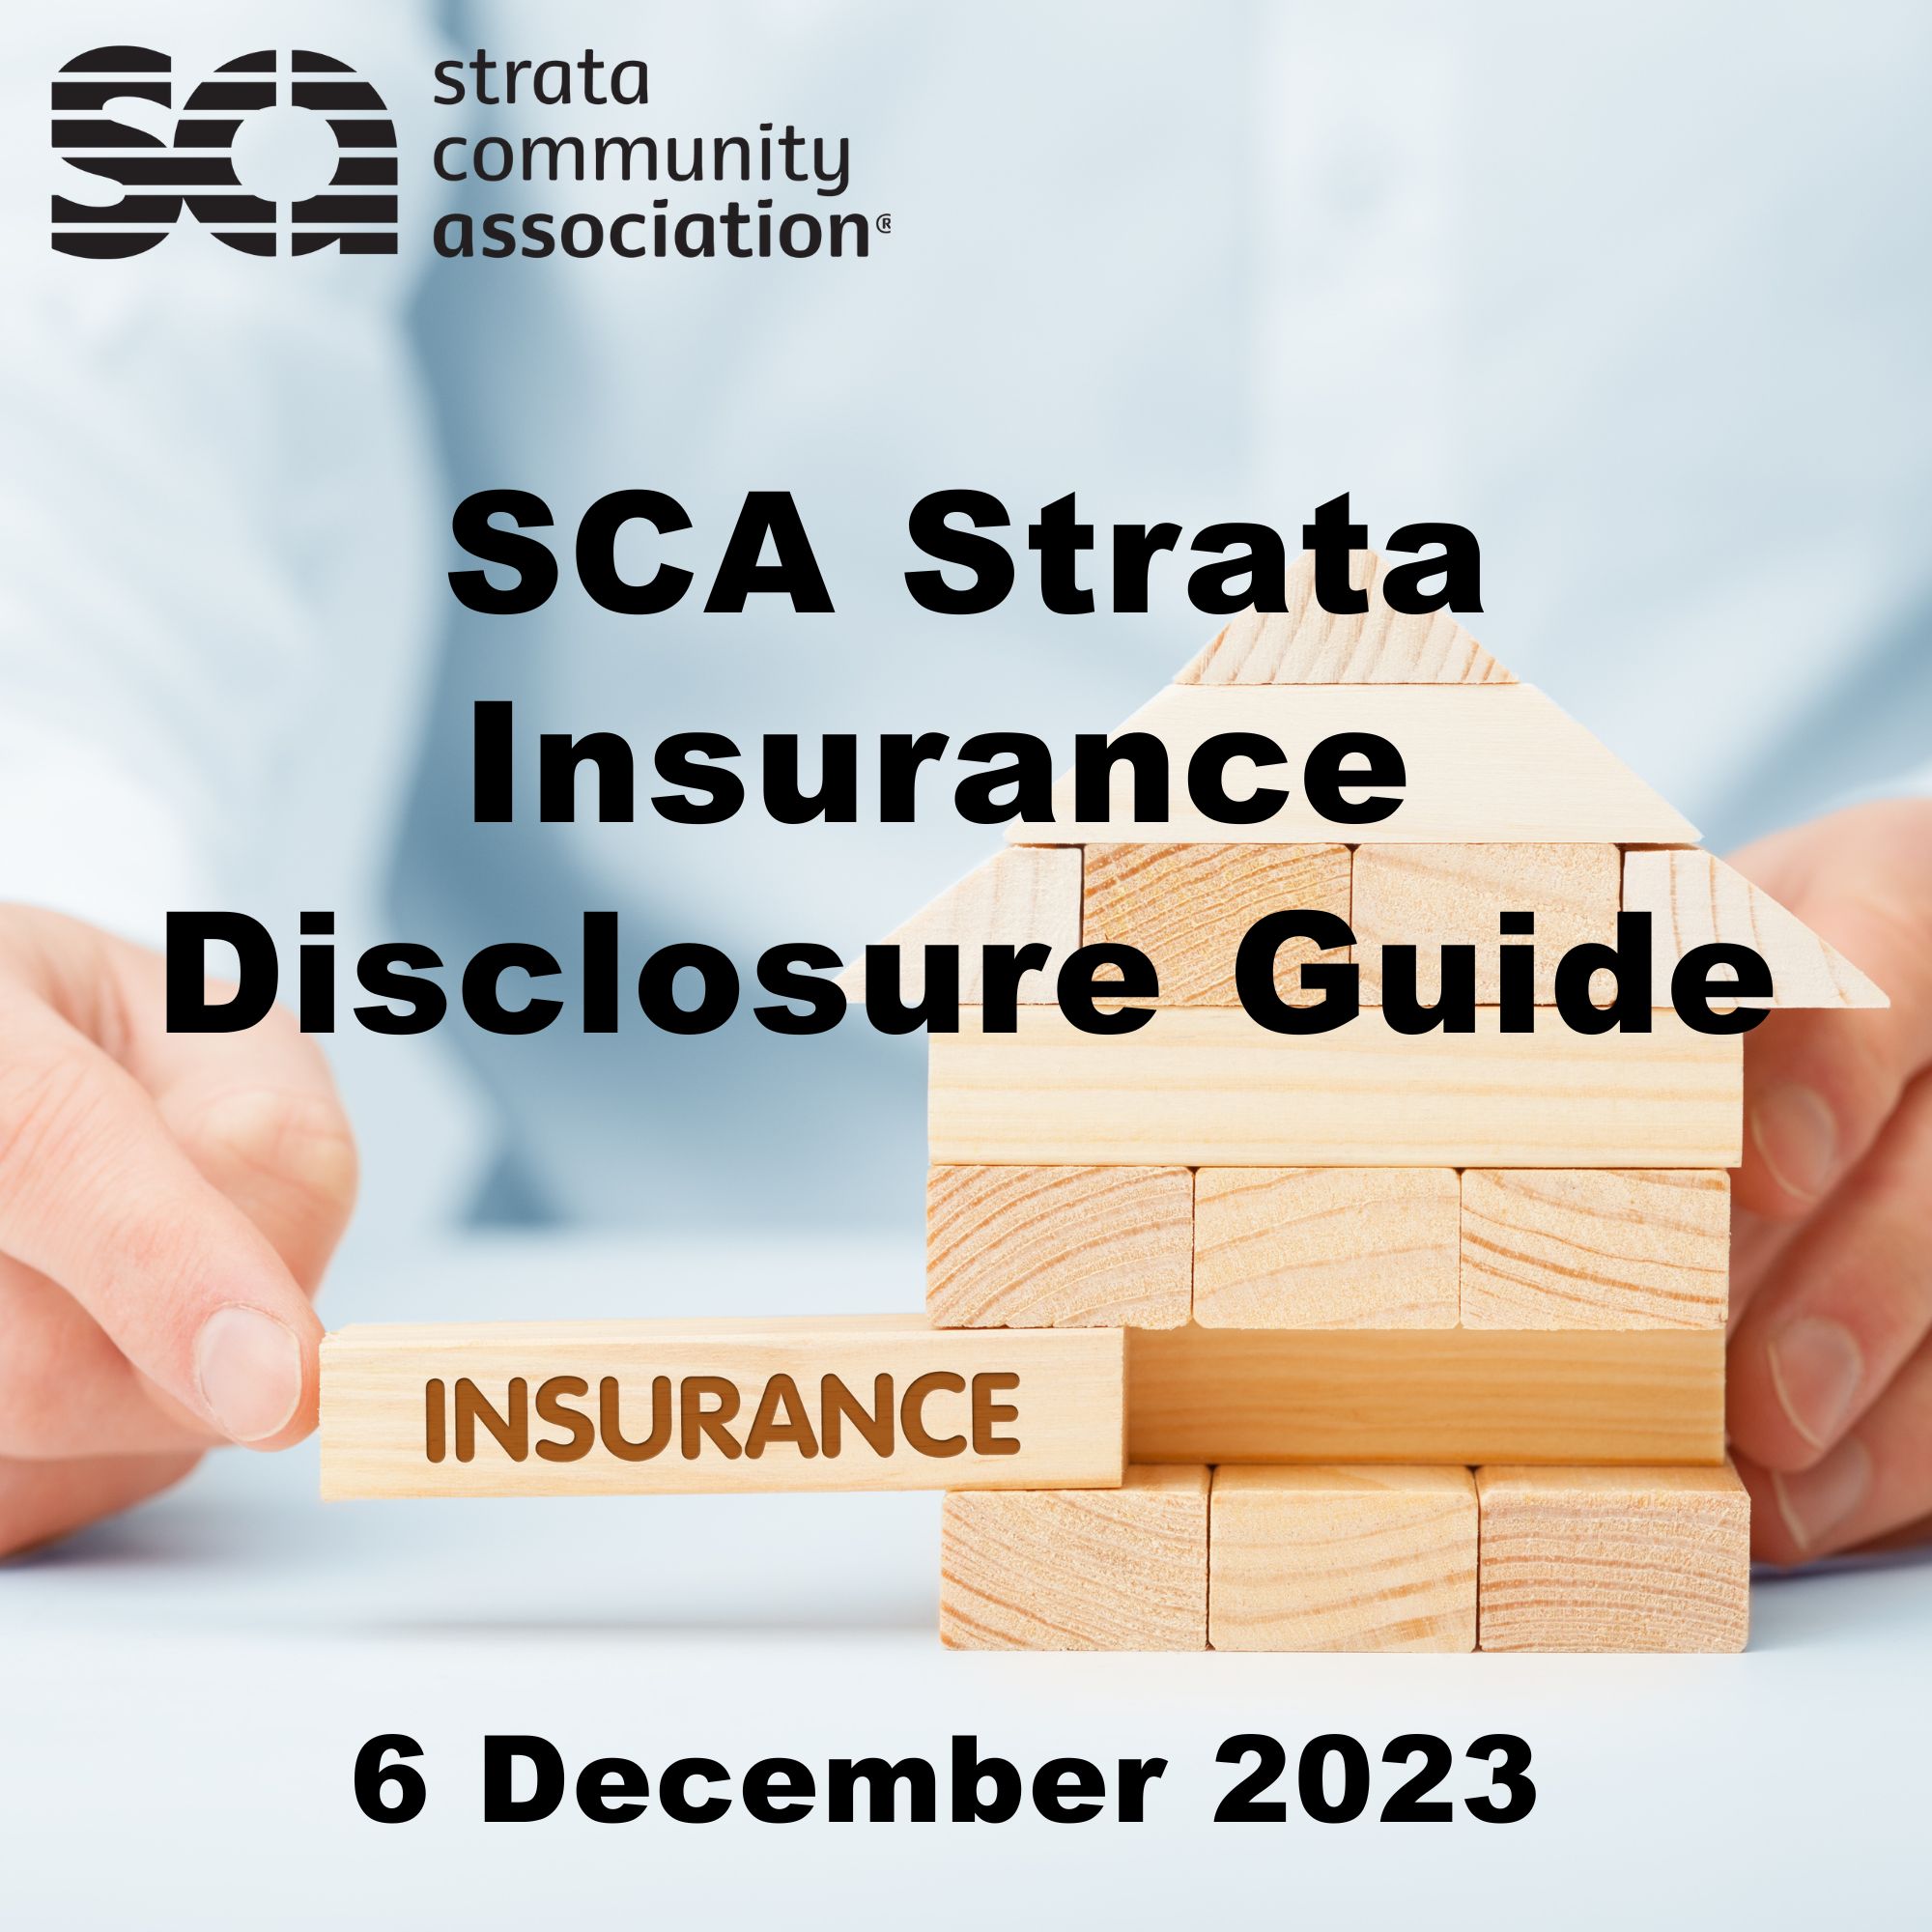 SCA Strata Insurance Disclosure Guide